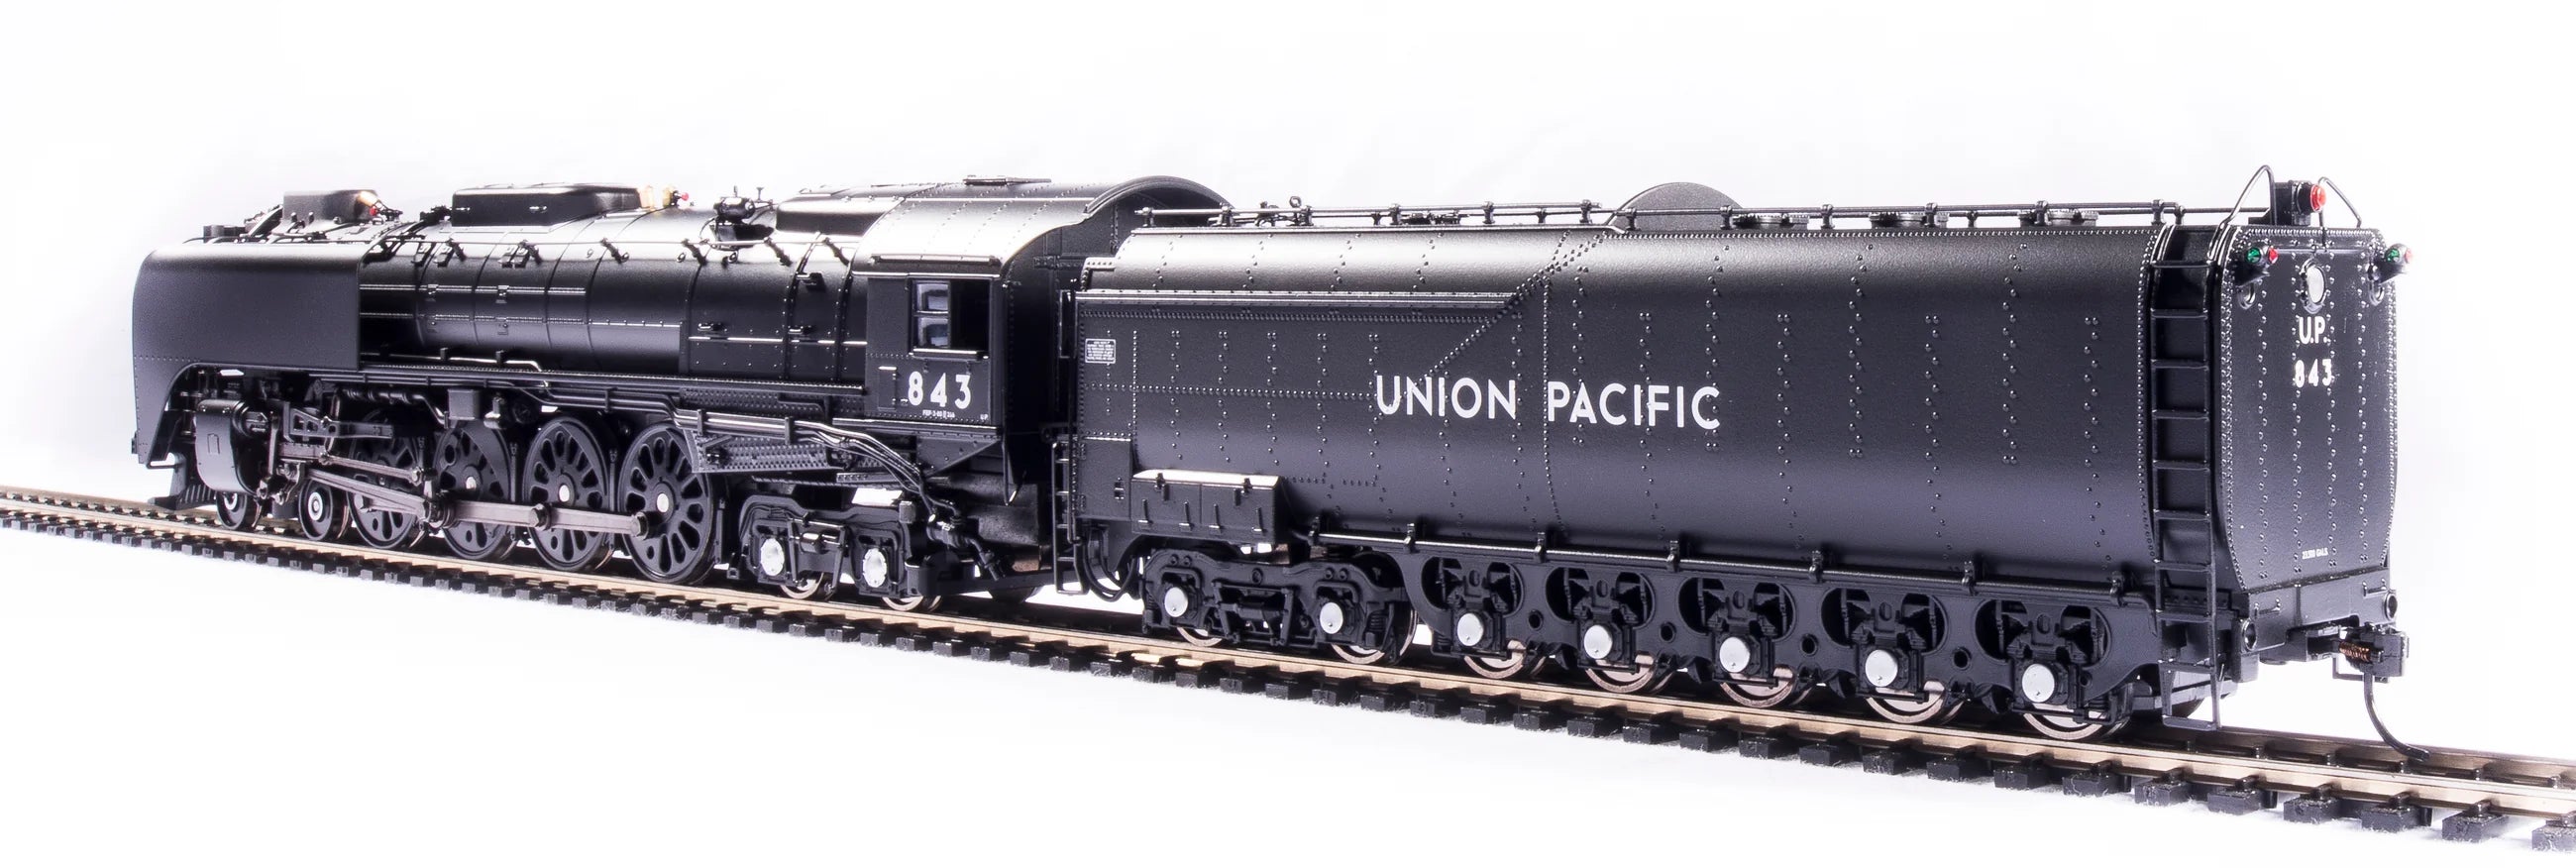 6644 Union Pacific 4-8-4, Class FEF-3, #842, Black & Graphite, Paragon4 Sound/DC/DCC, Smoke, HO